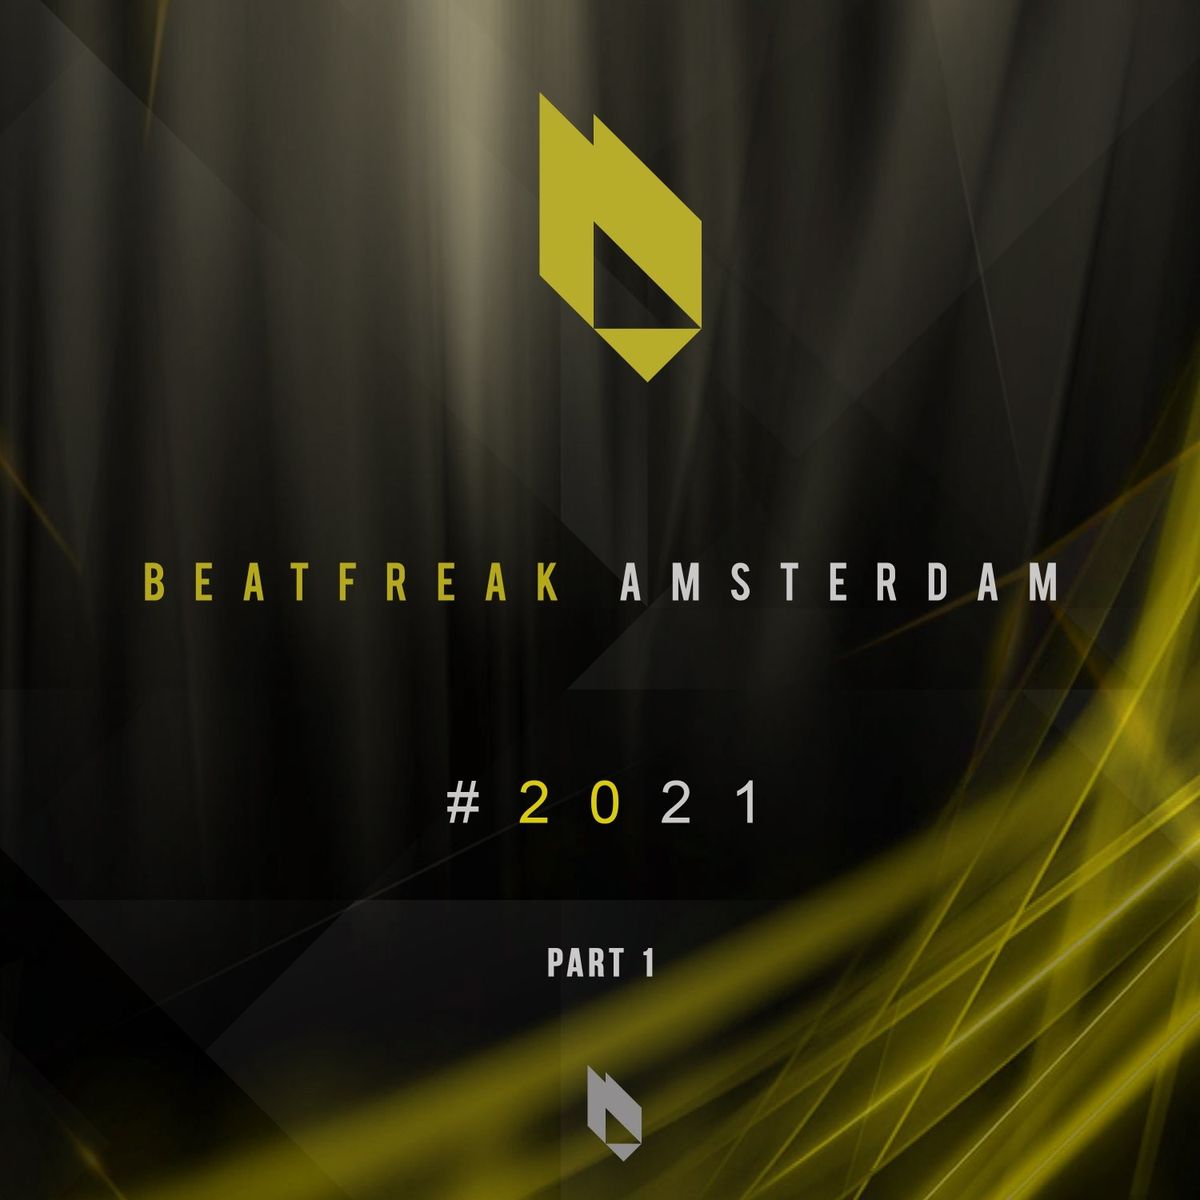 VA - Beatfreak Amsterdam 2021 _Part 1 [BF299ADE1]